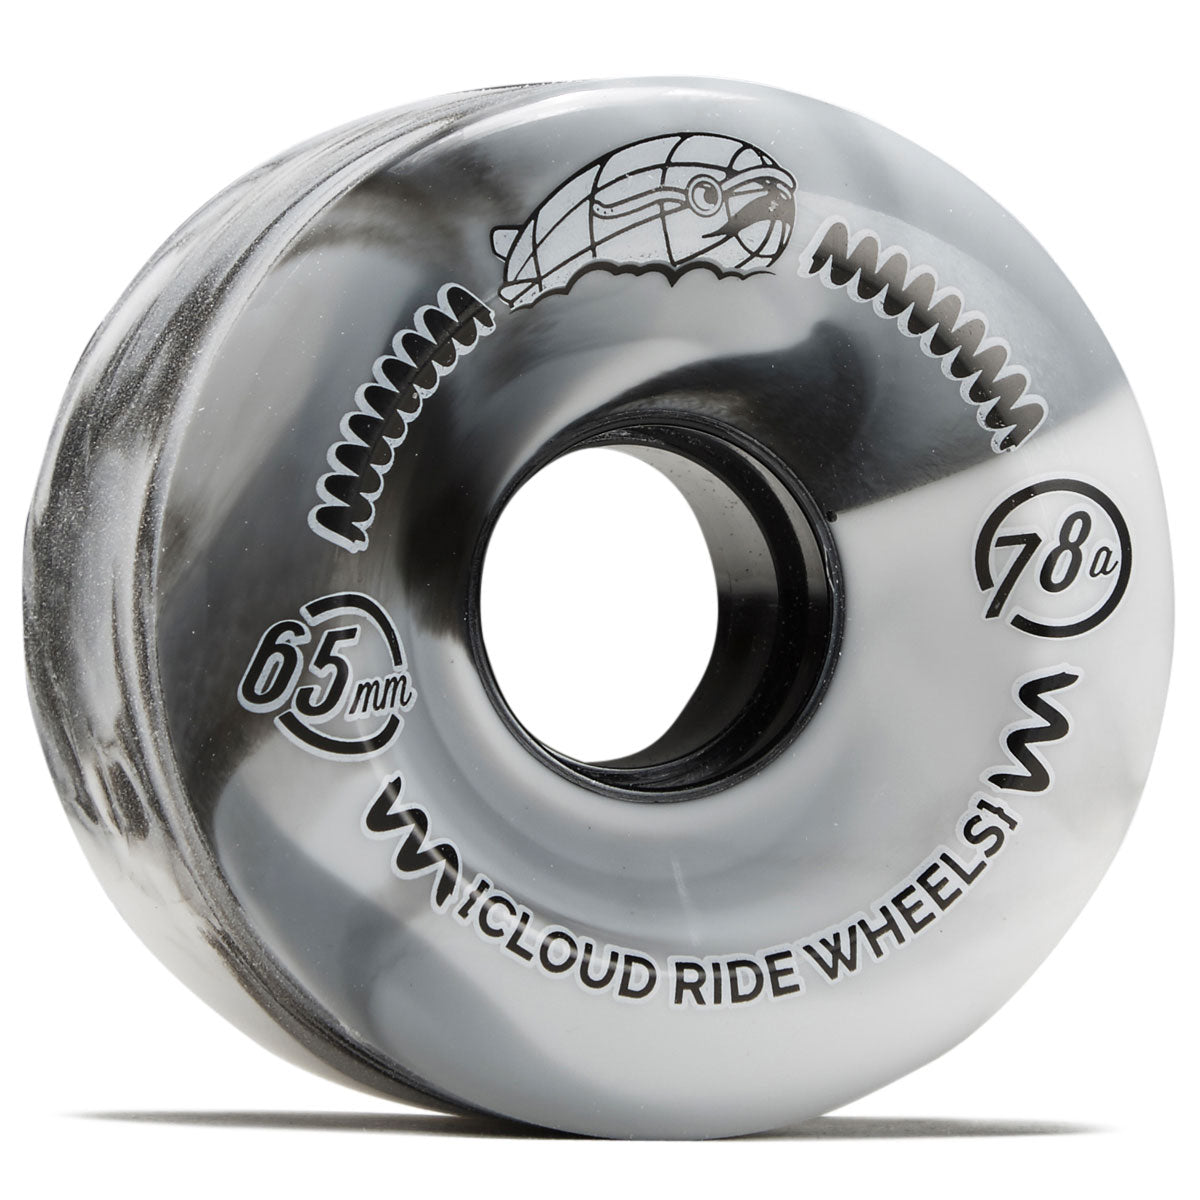 Cloud Ride Street Cruisers 78a Longboard Wheels - Marble Black - 65mm image 1